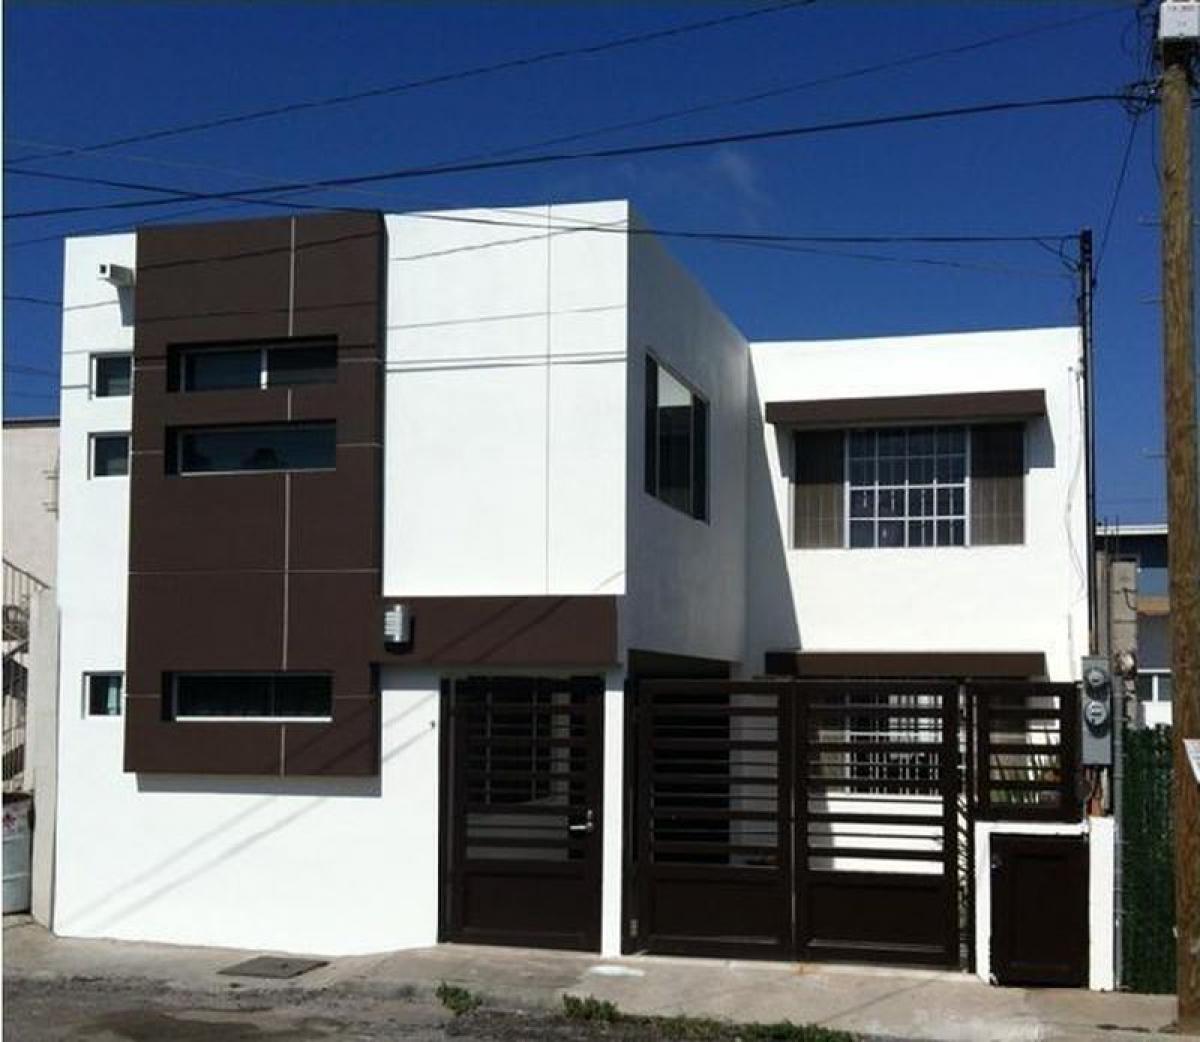 Ensenada, Ensenada, Baja California, Mexico | Homes For Sale at GLOBAL ...